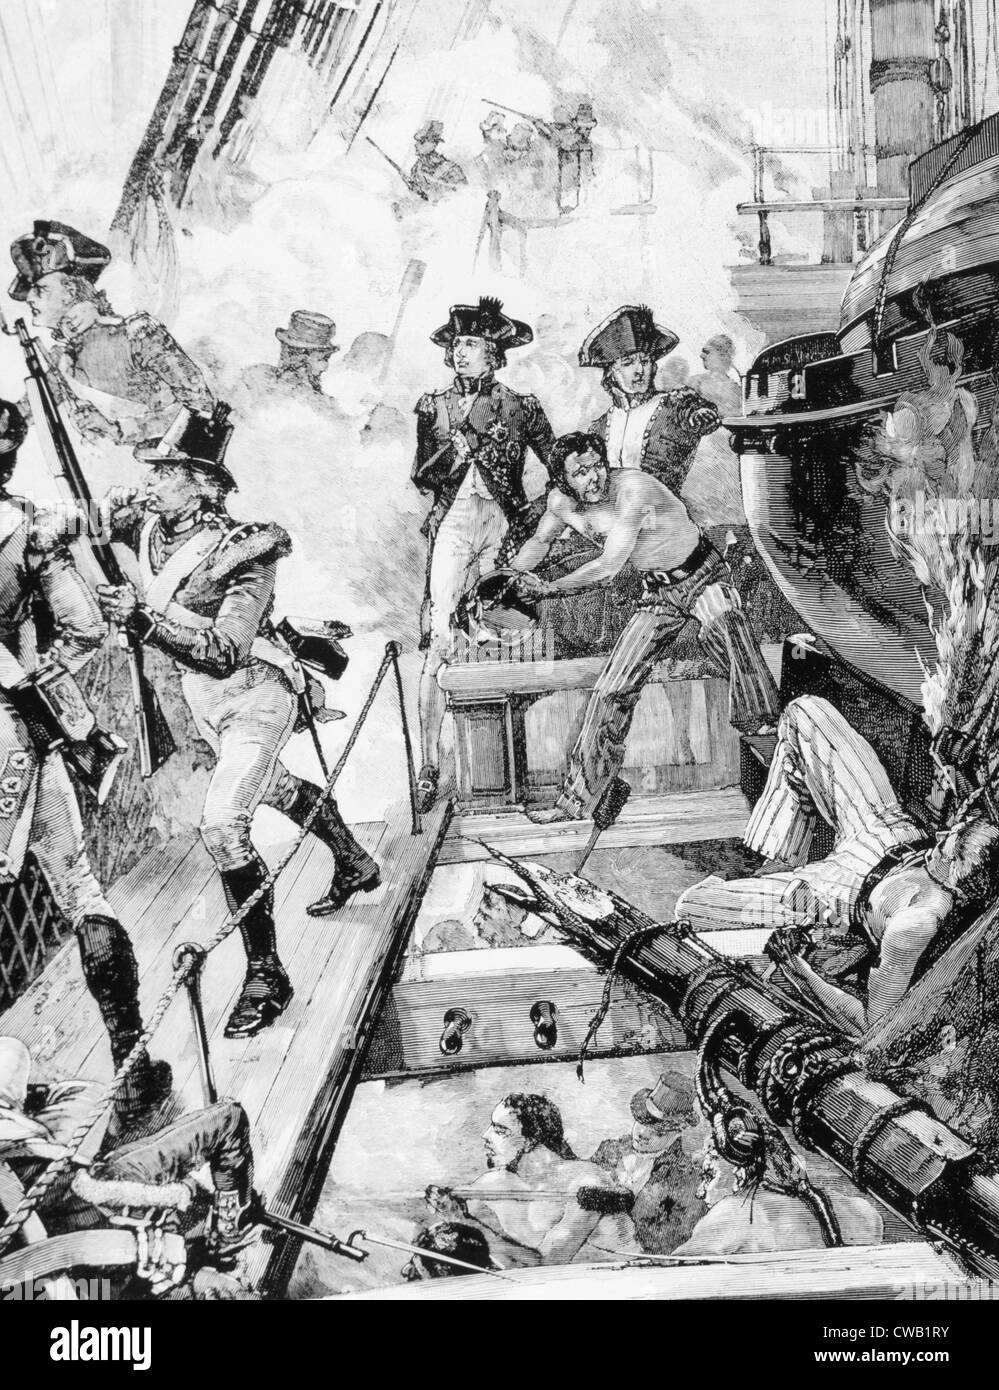 Lord Horatio Nelson at the Battle of Trafalgar, 1805 Stock Photo